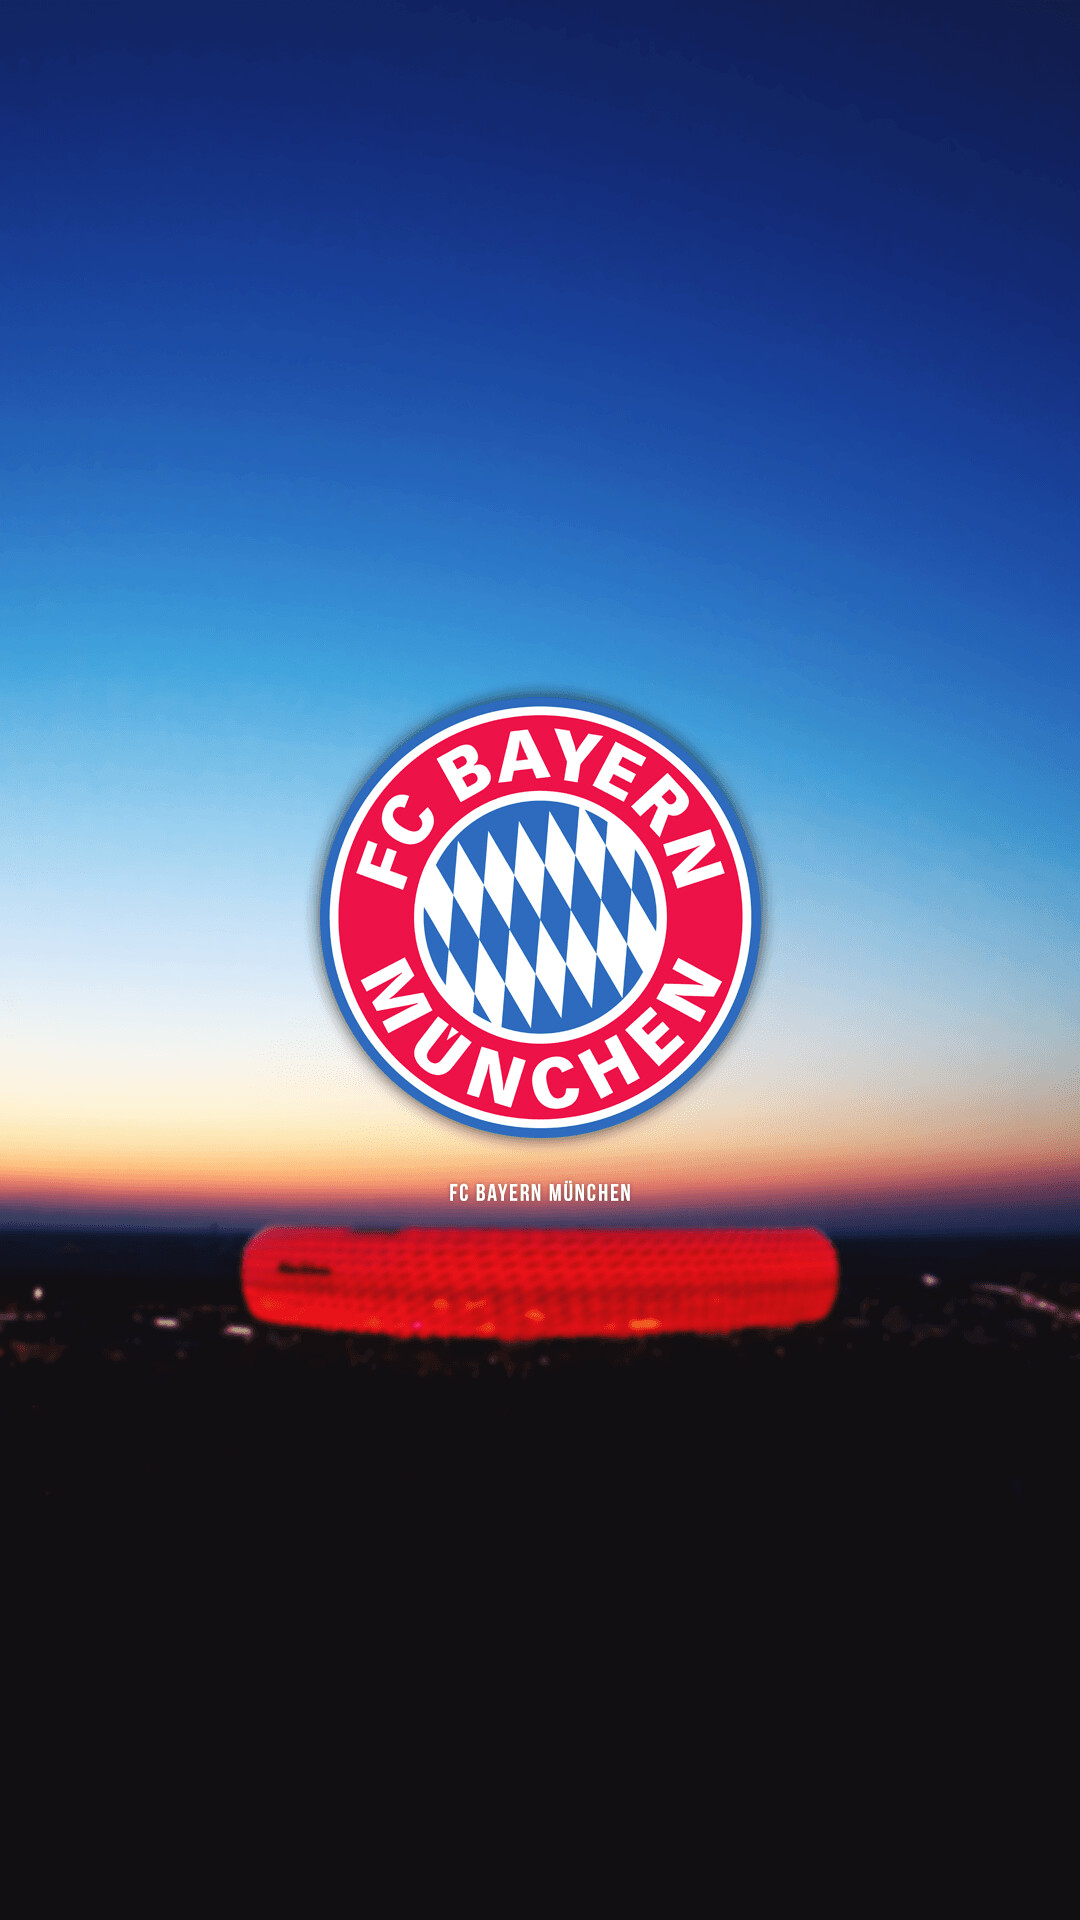 Germany Soccer Team: FC Bayern Munich, Allianz Arena Stadium, Oliver Kahn, Julian Nagelsmann, The Bundesliga. 1080x1920 Full HD Background.